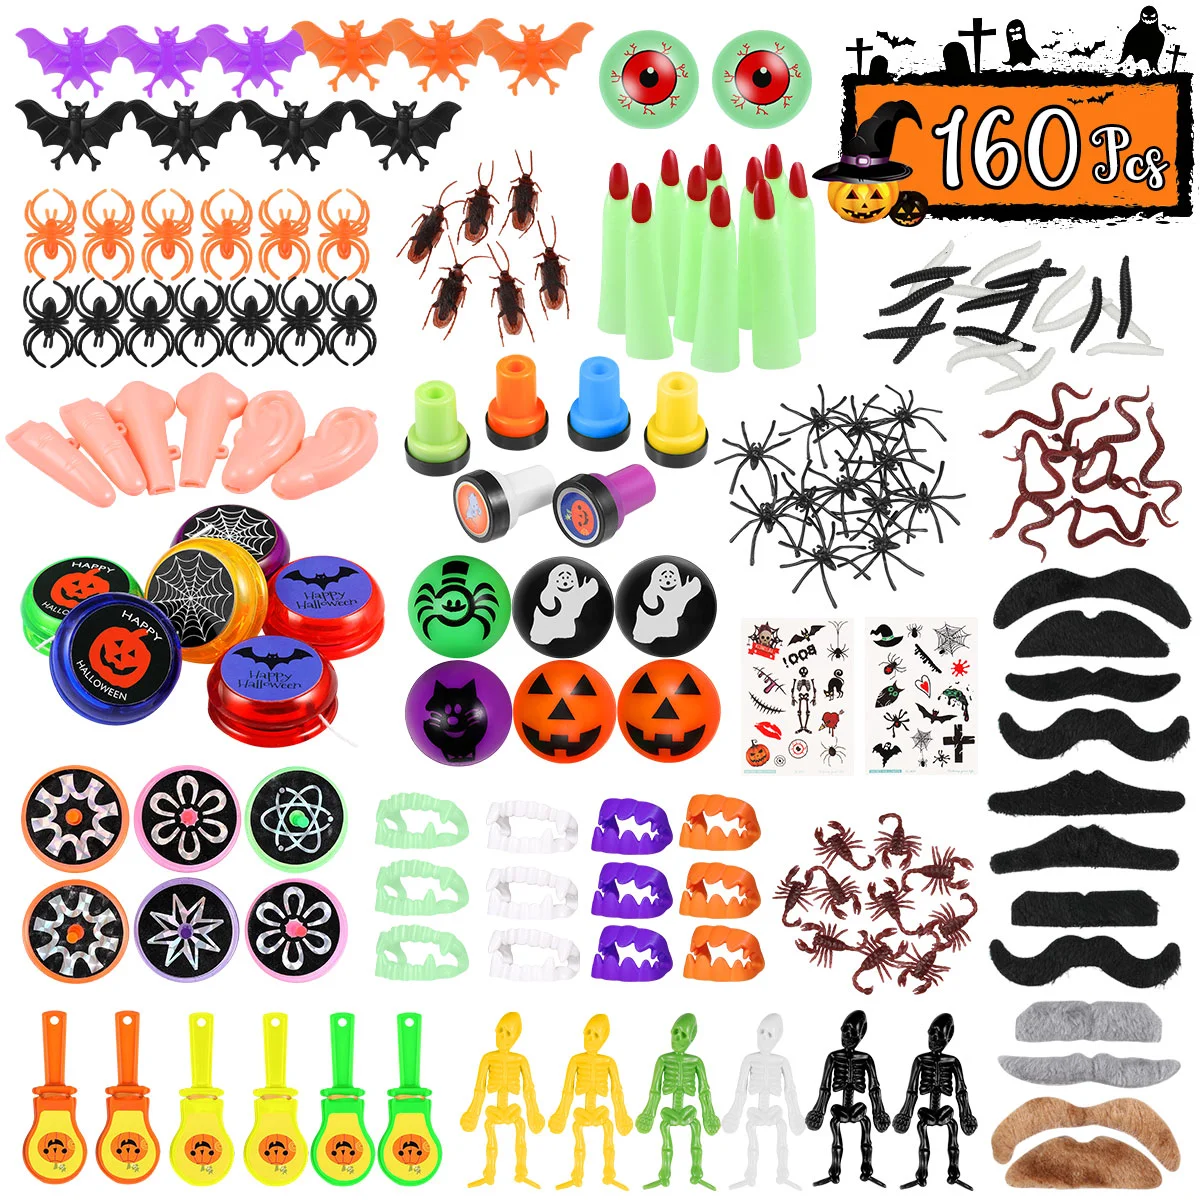 

1 Set of 160Pcs Favors Set, Stationery Set Goodie Bag Fillers for Trick or Treat, Exchange, Carnival Game Prizes| 20 Patterns